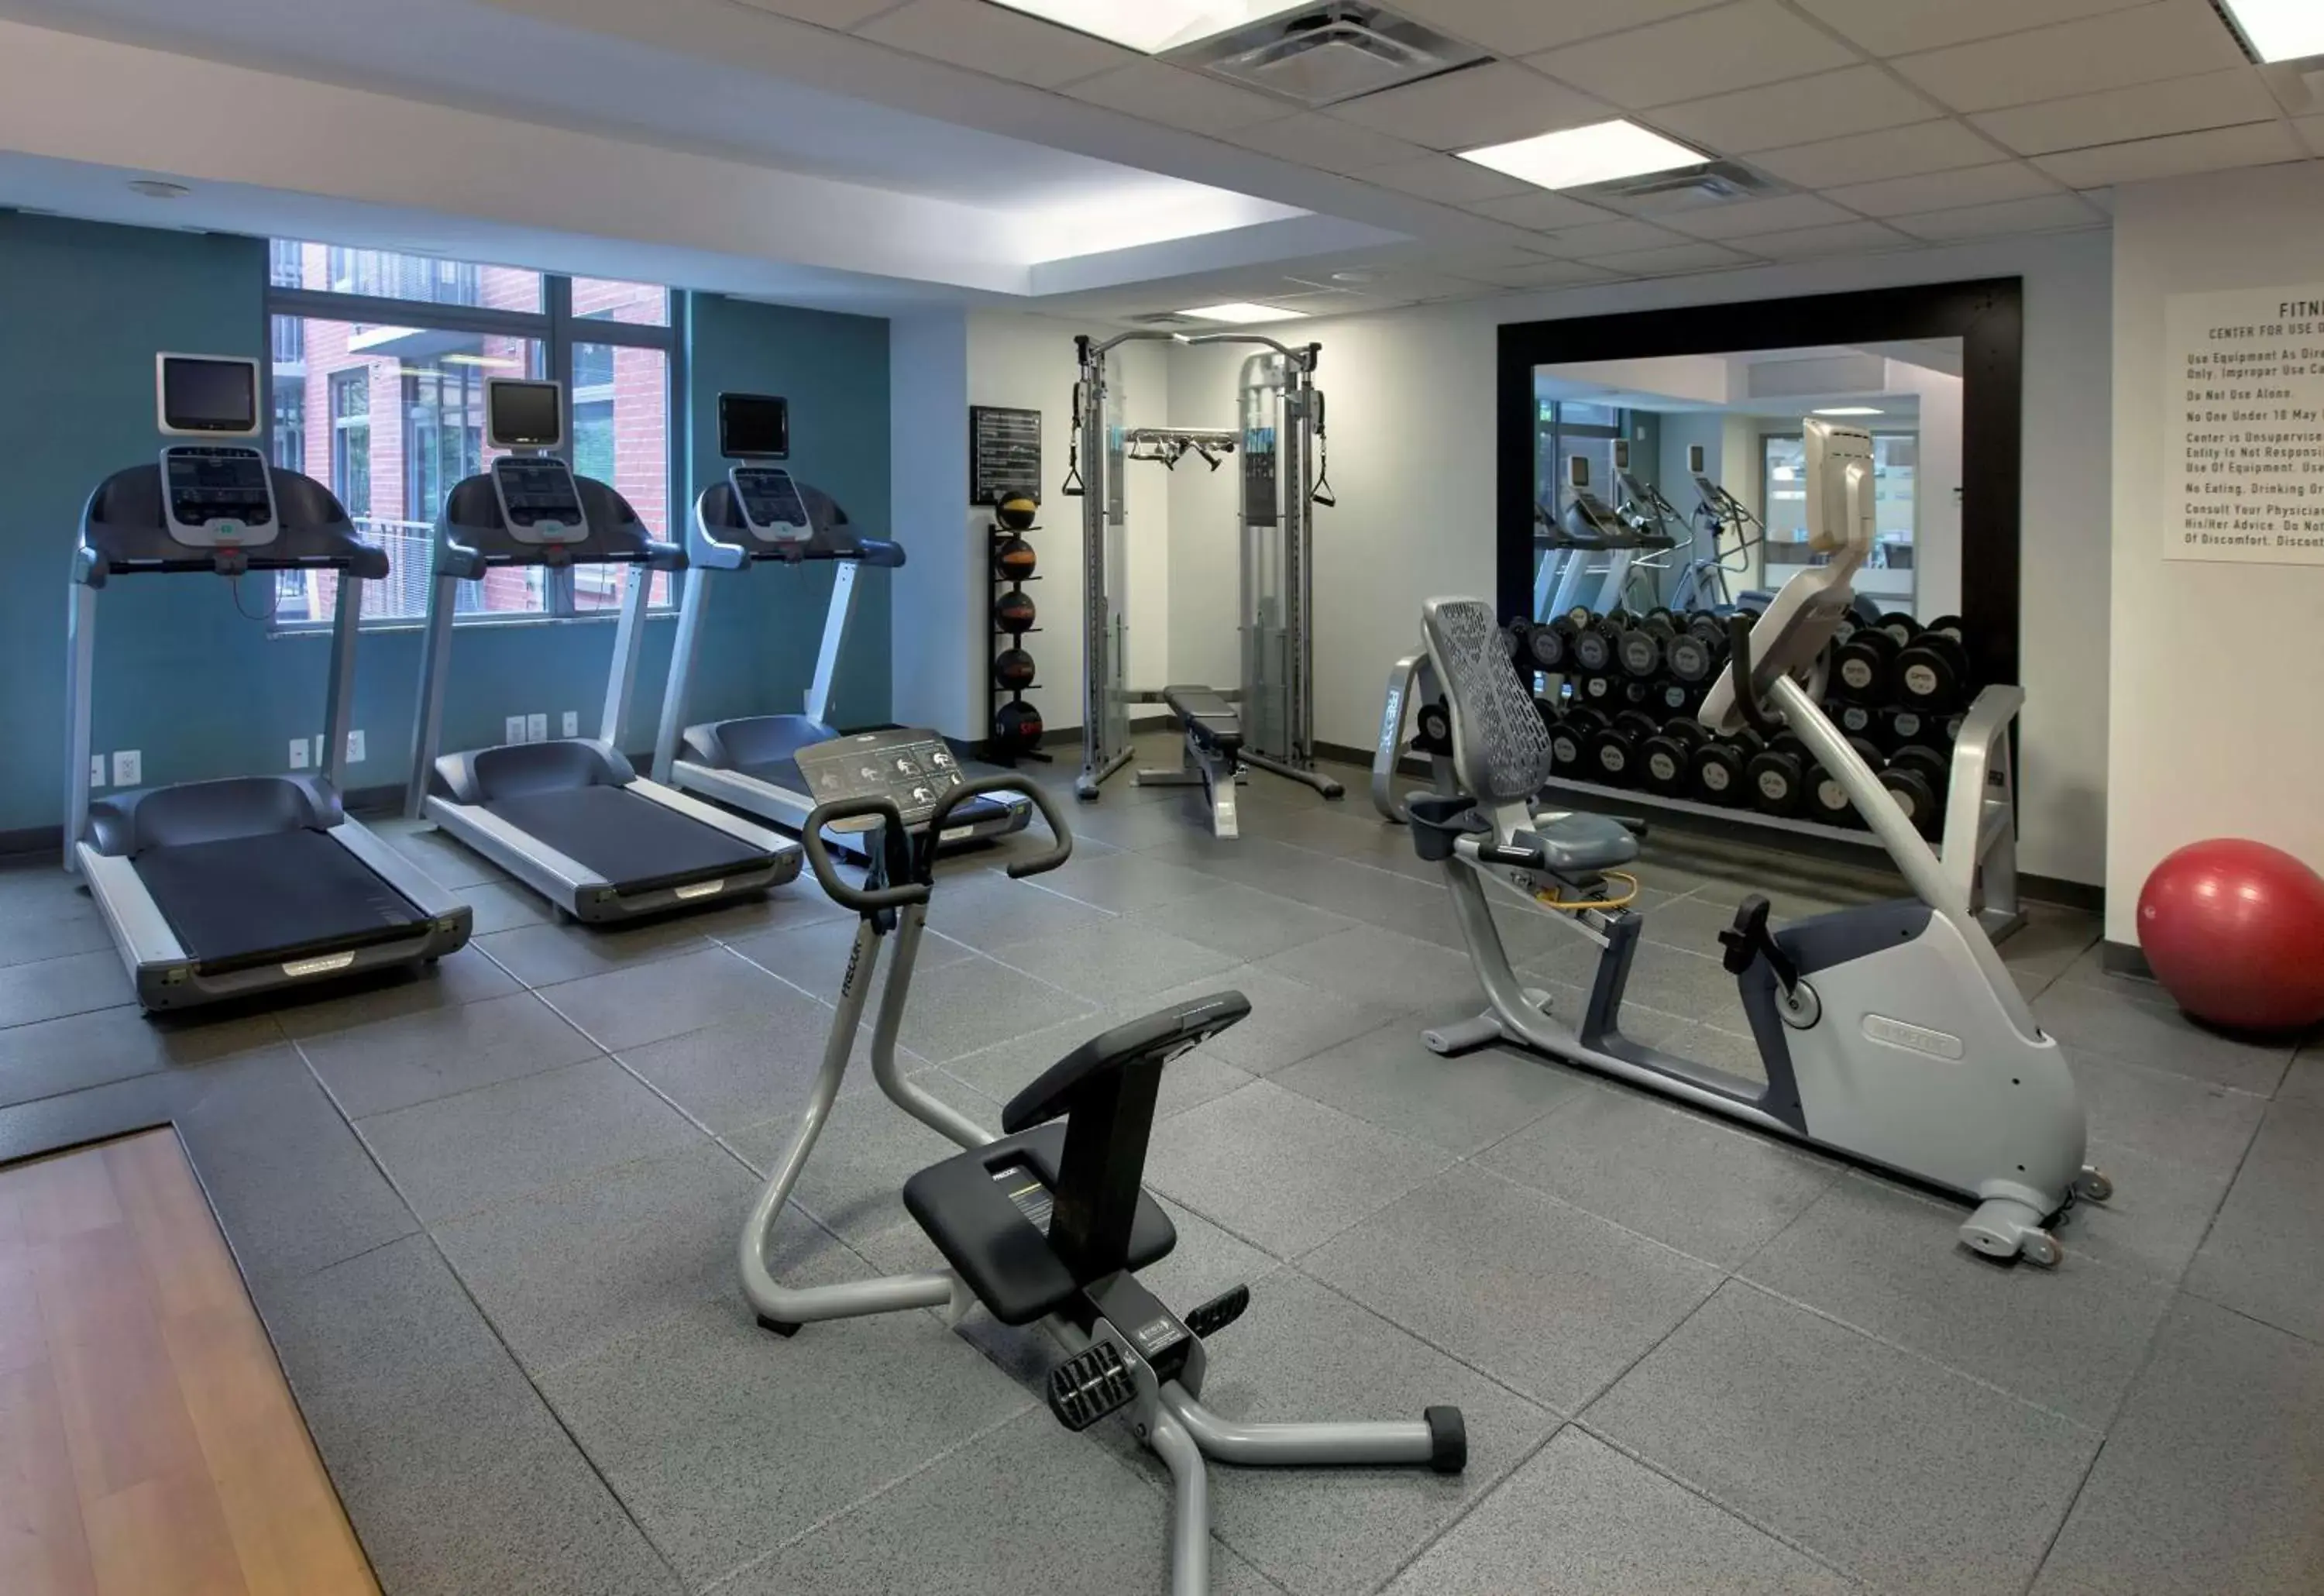 Fitness centre/facilities, Fitness Center/Facilities in Hilton Garden Inn Washington D.C./U.S. Capitol